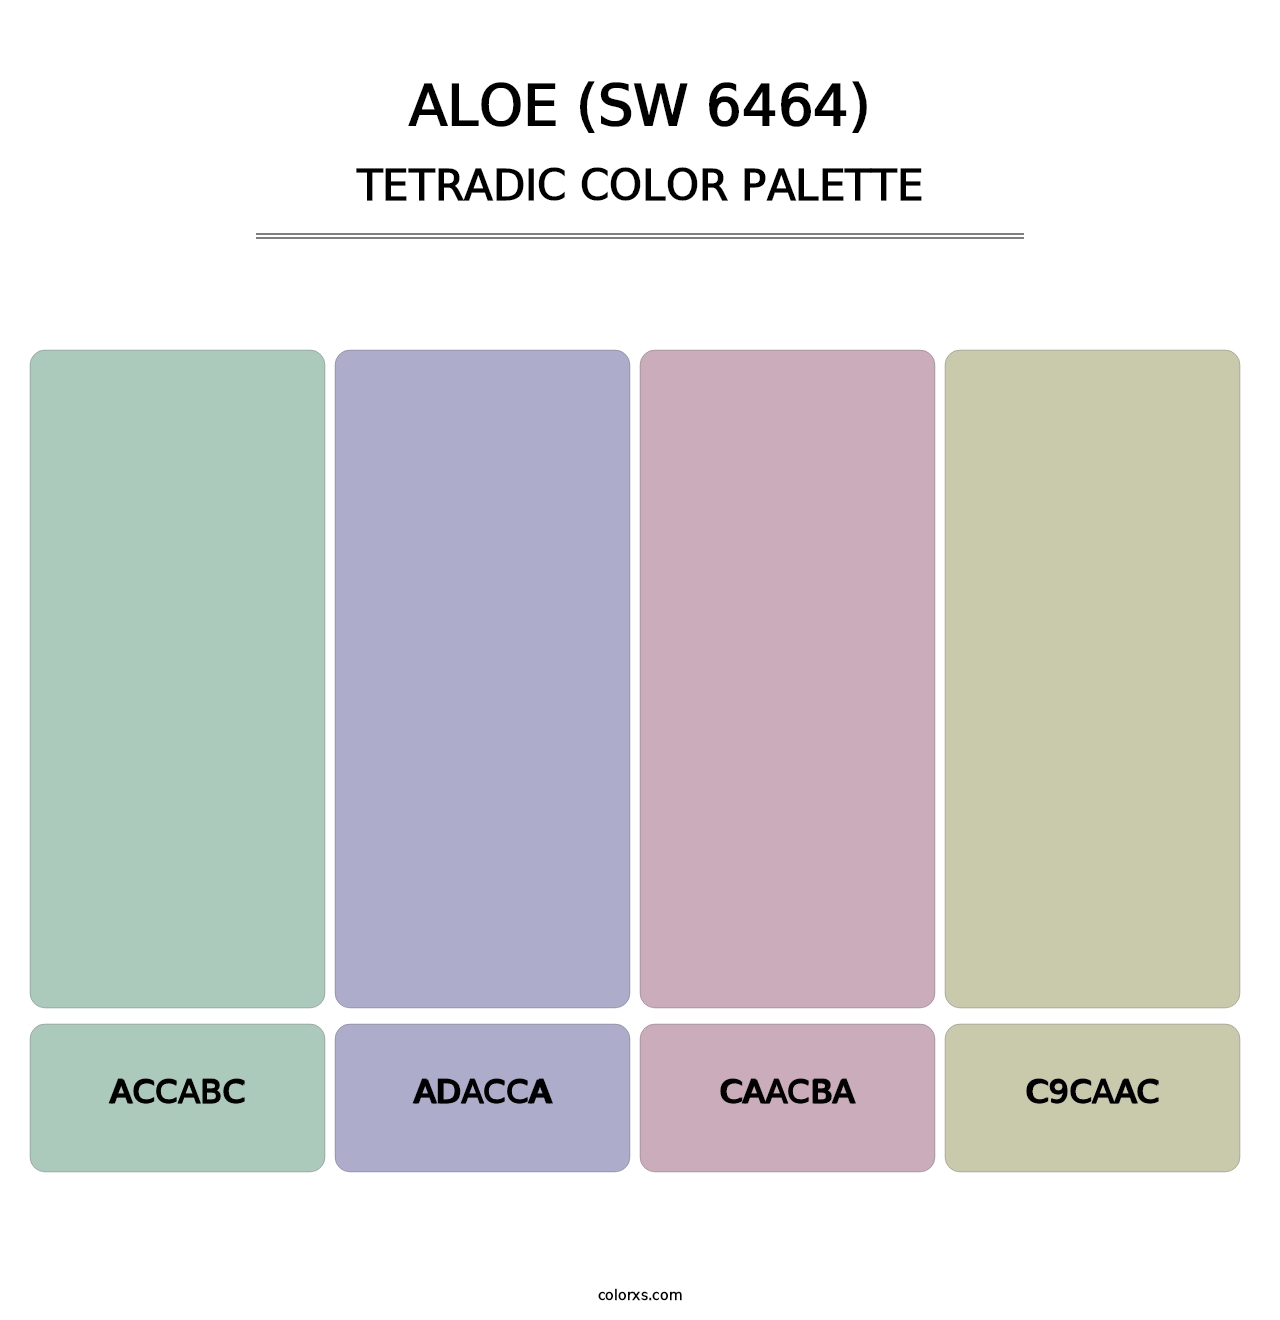 Aloe (SW 6464) - Tetradic Color Palette